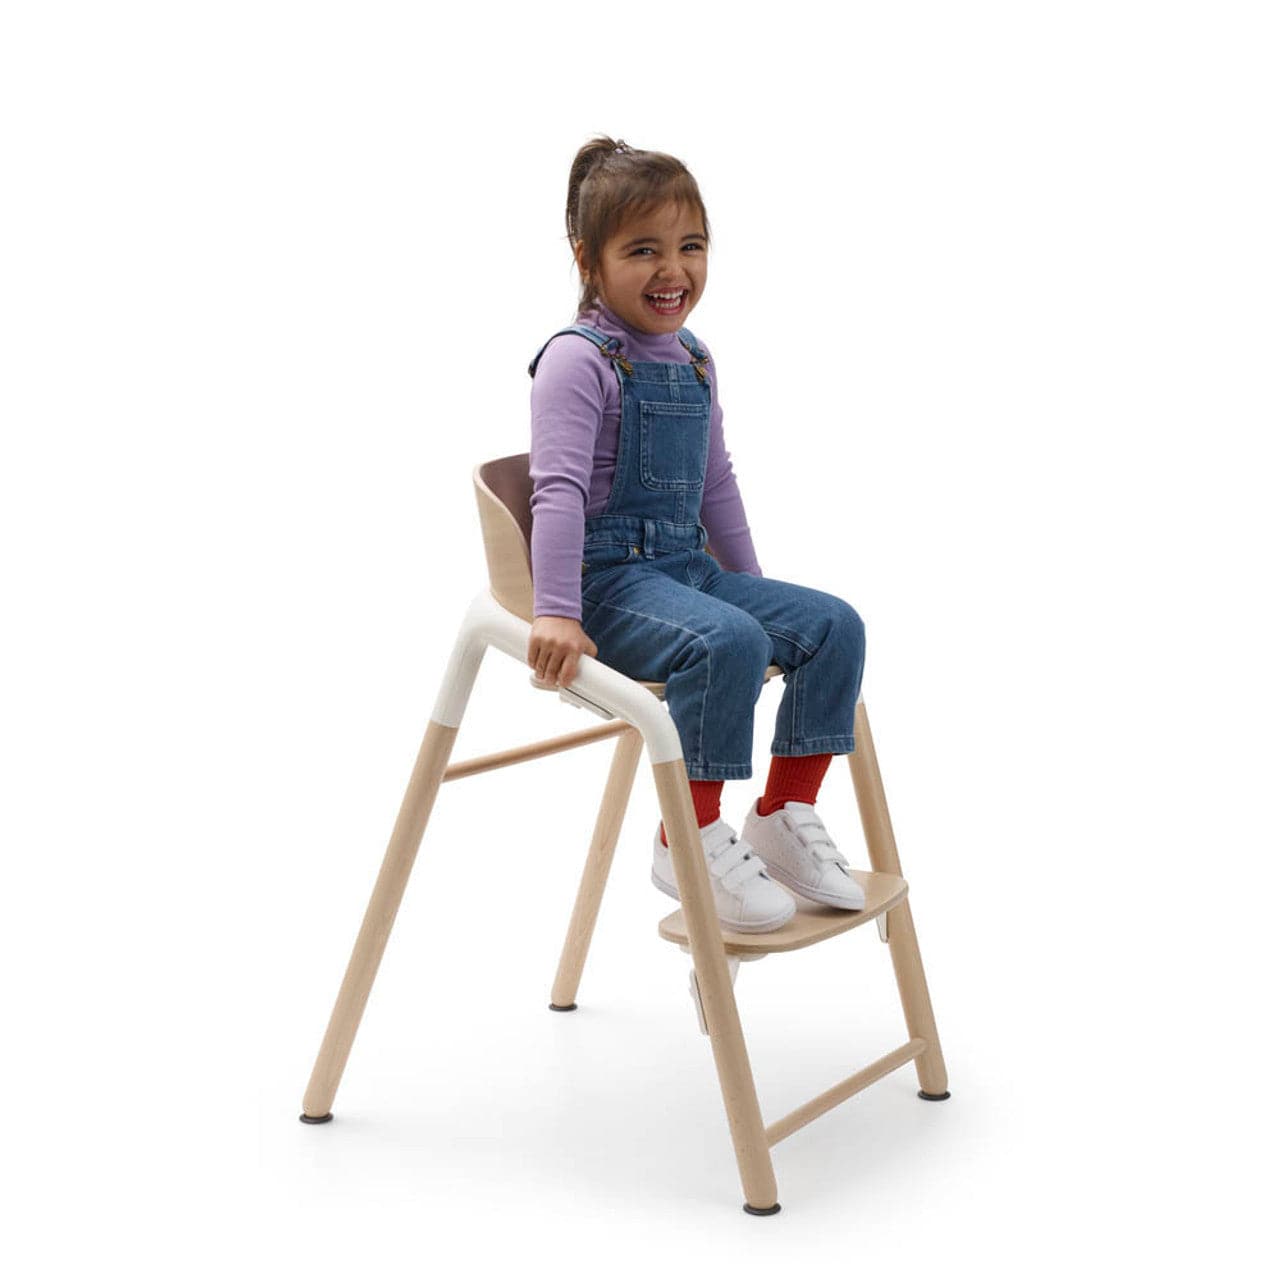 Bugaboo Giraffe Highchair + Baby Set & Pillow Set - Neutral Wood/White -  | For Your Little One